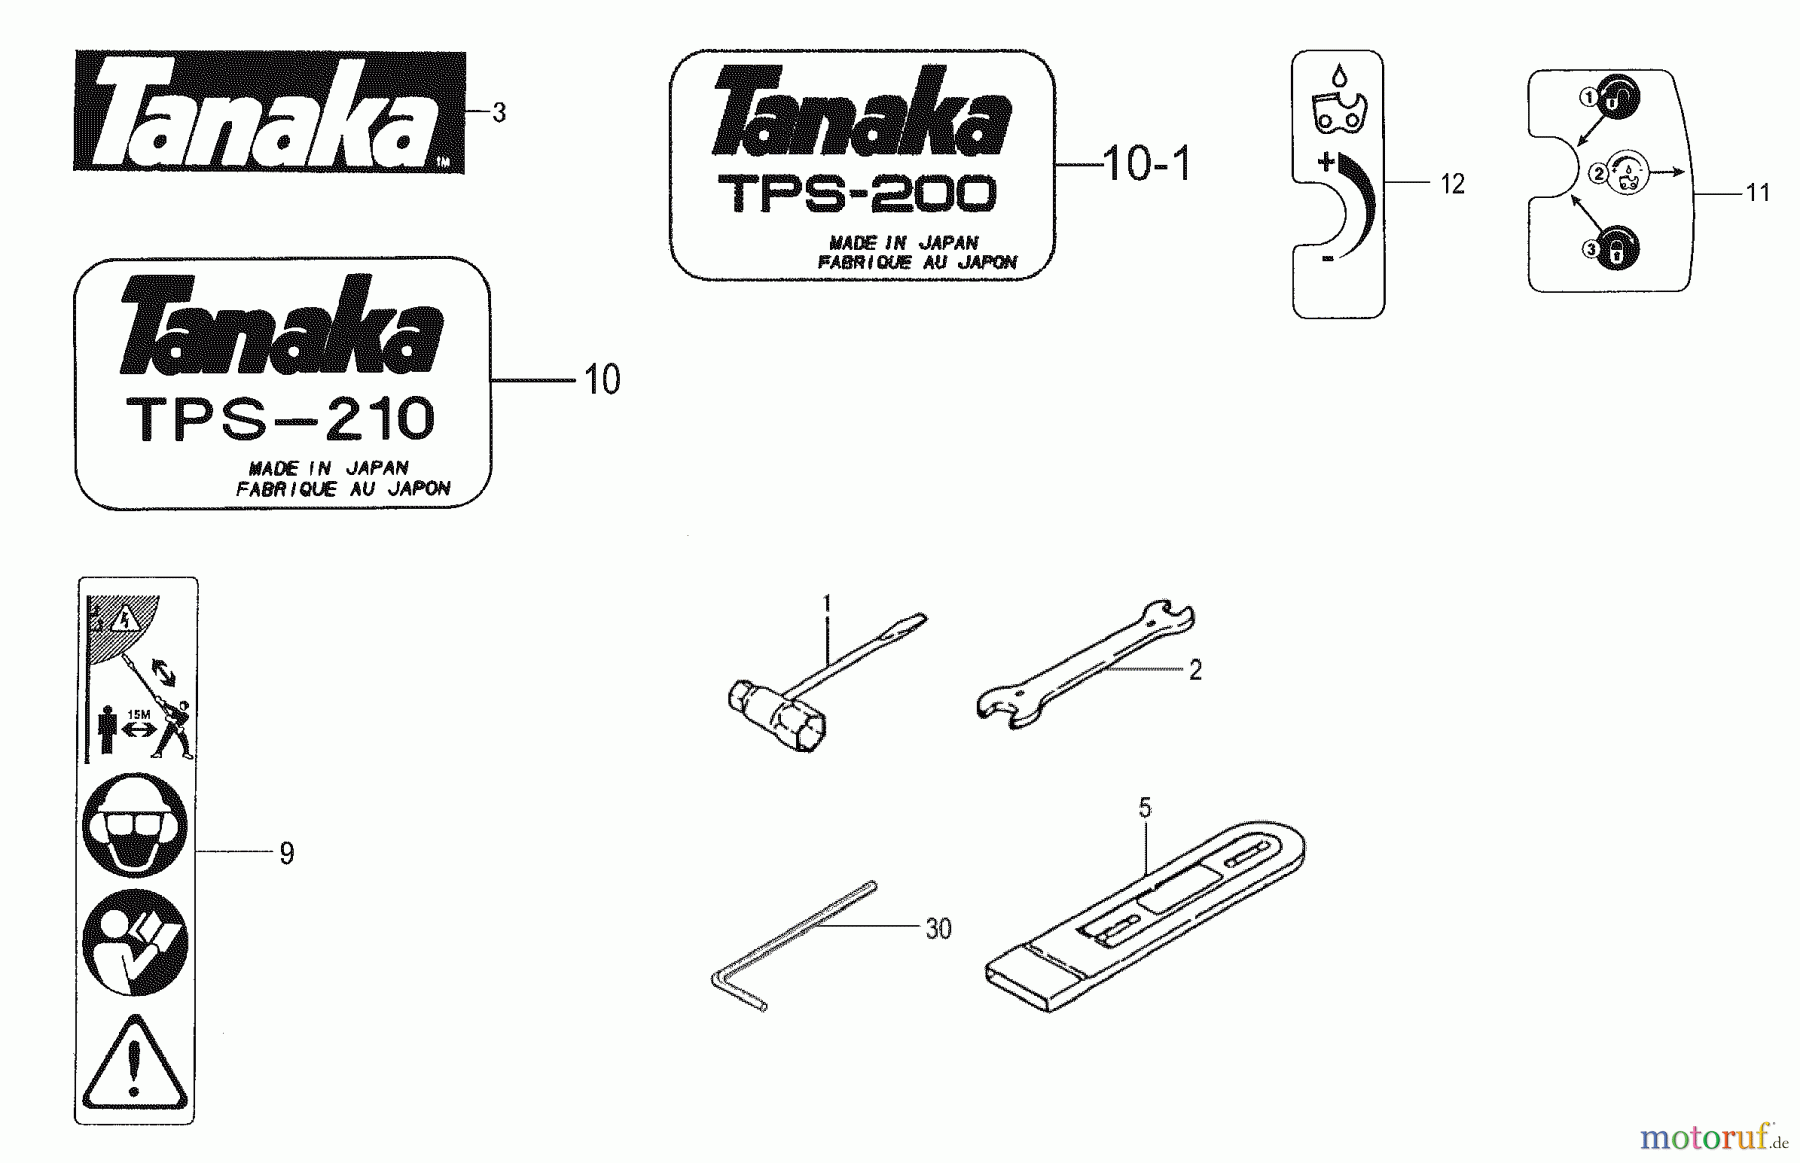  Tanaka Zubehör TPS-200 - Tanaka Pole Saw Attachment Tools & Decals